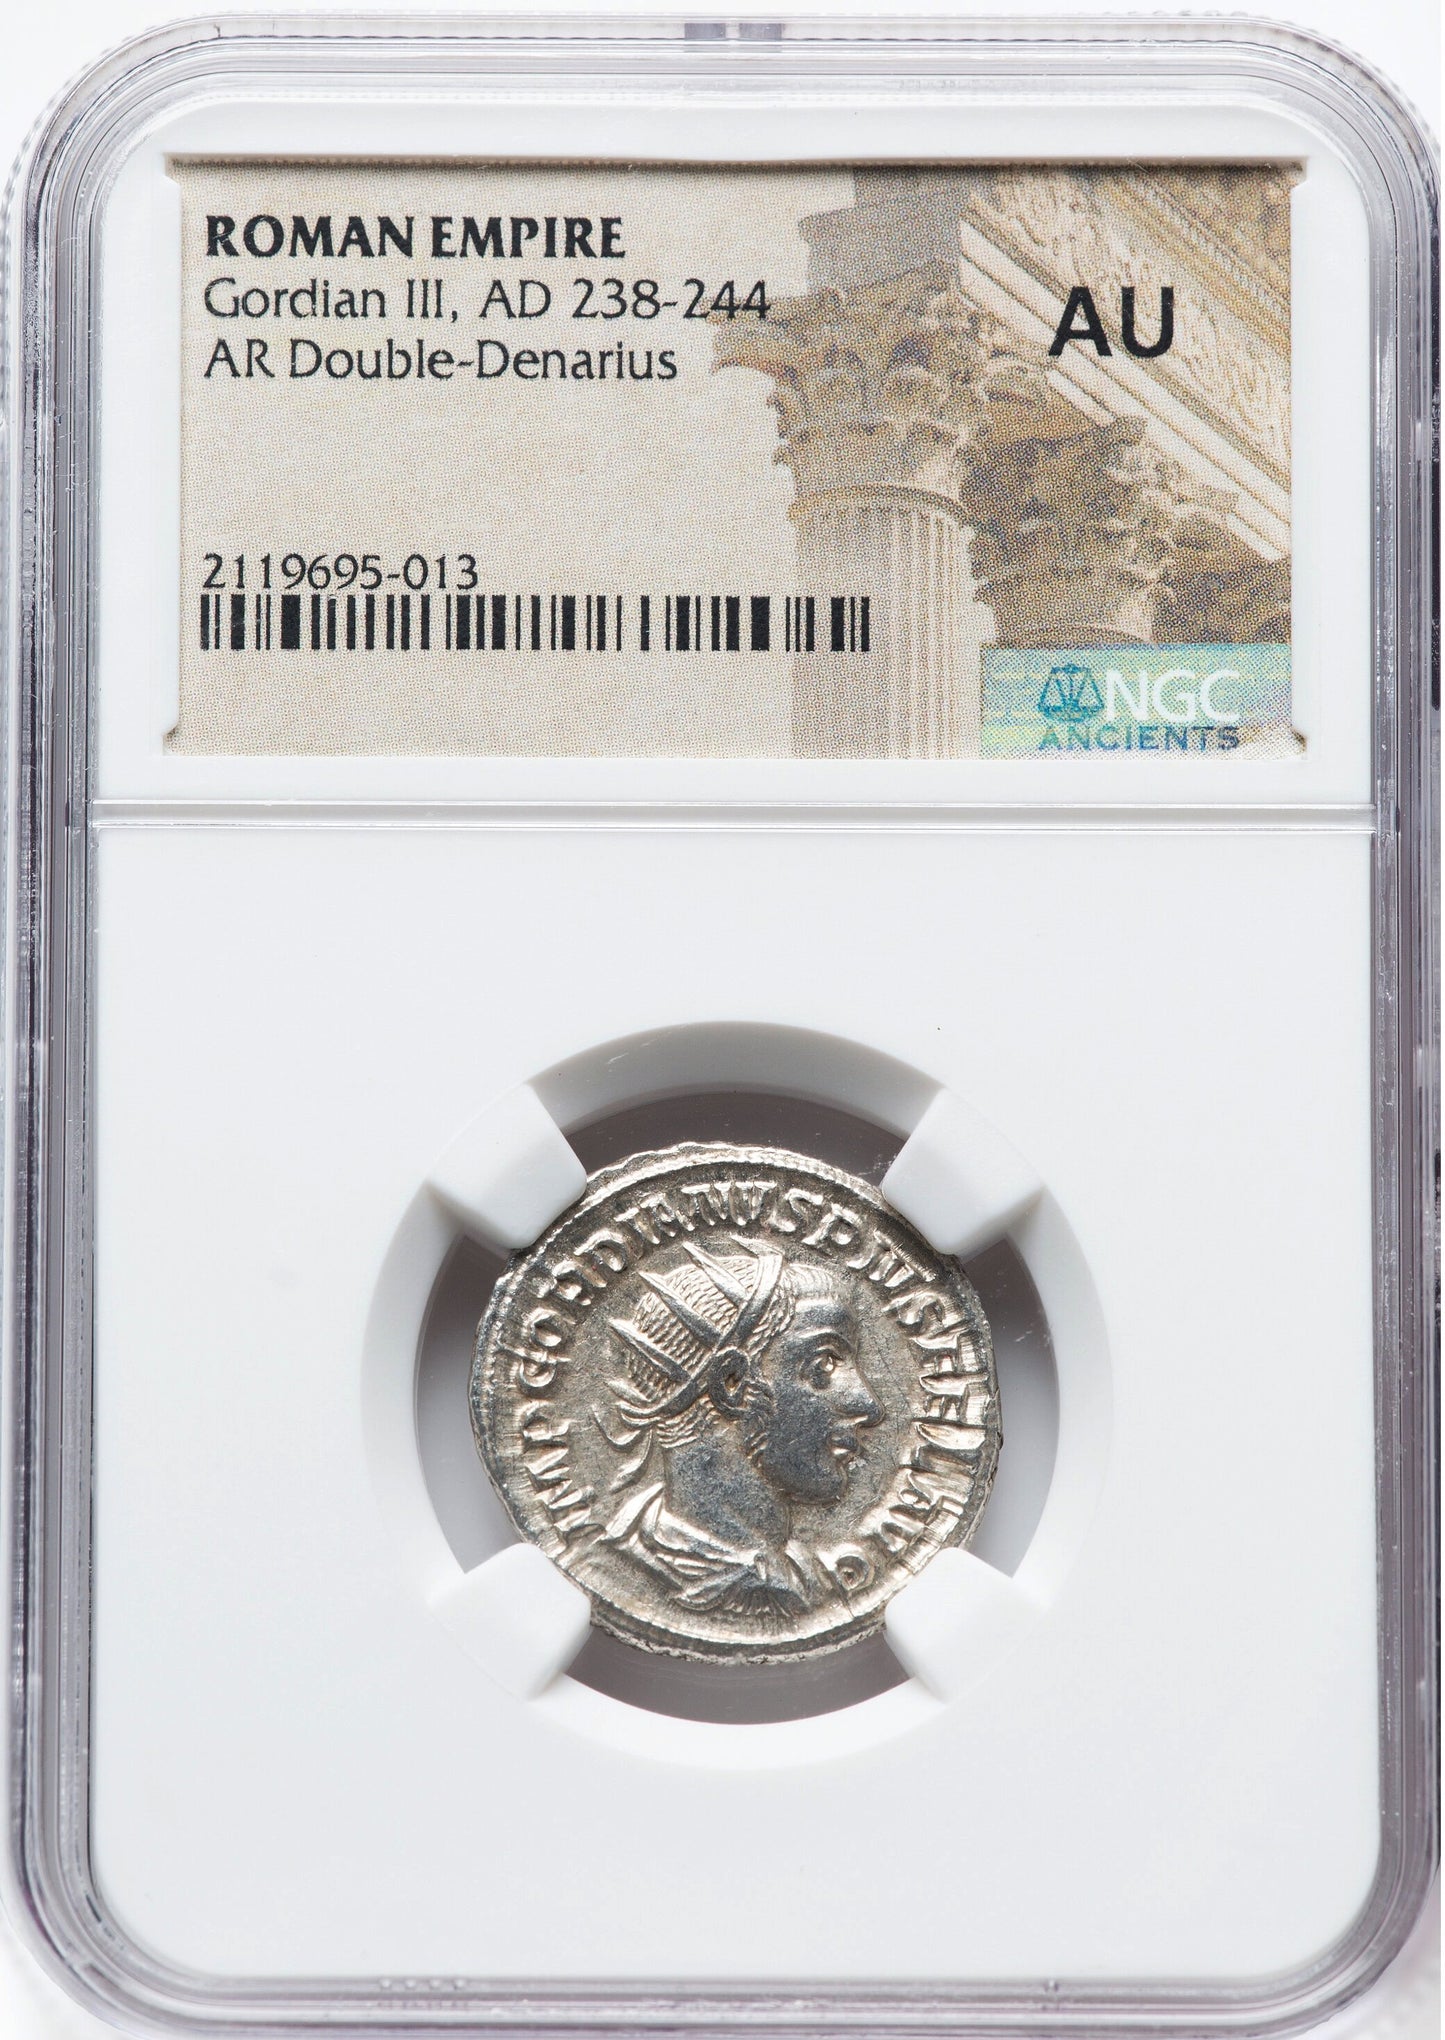 Roman Empire - Gordian III - Silver Double-Denarius - NGC AU